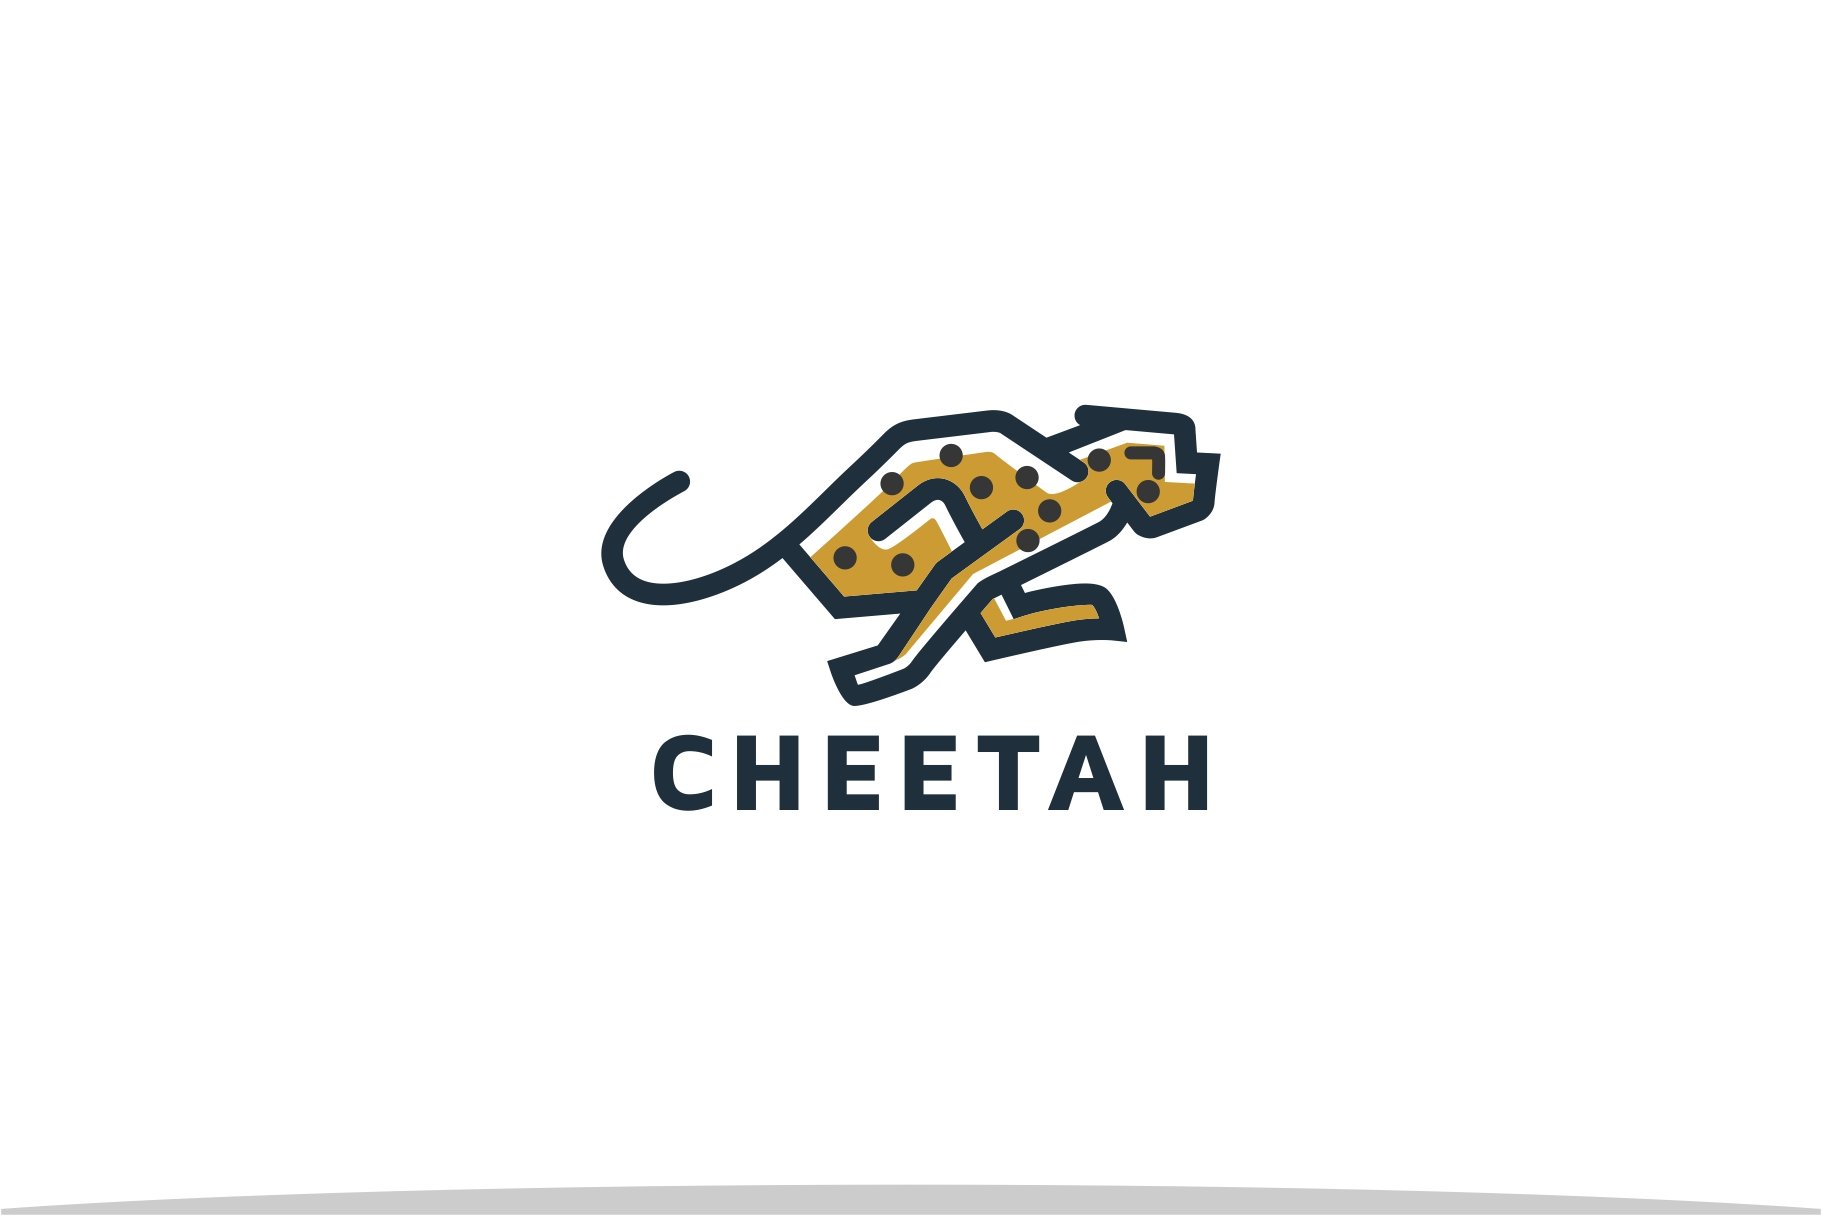 Cheetah Logo Template cover image.